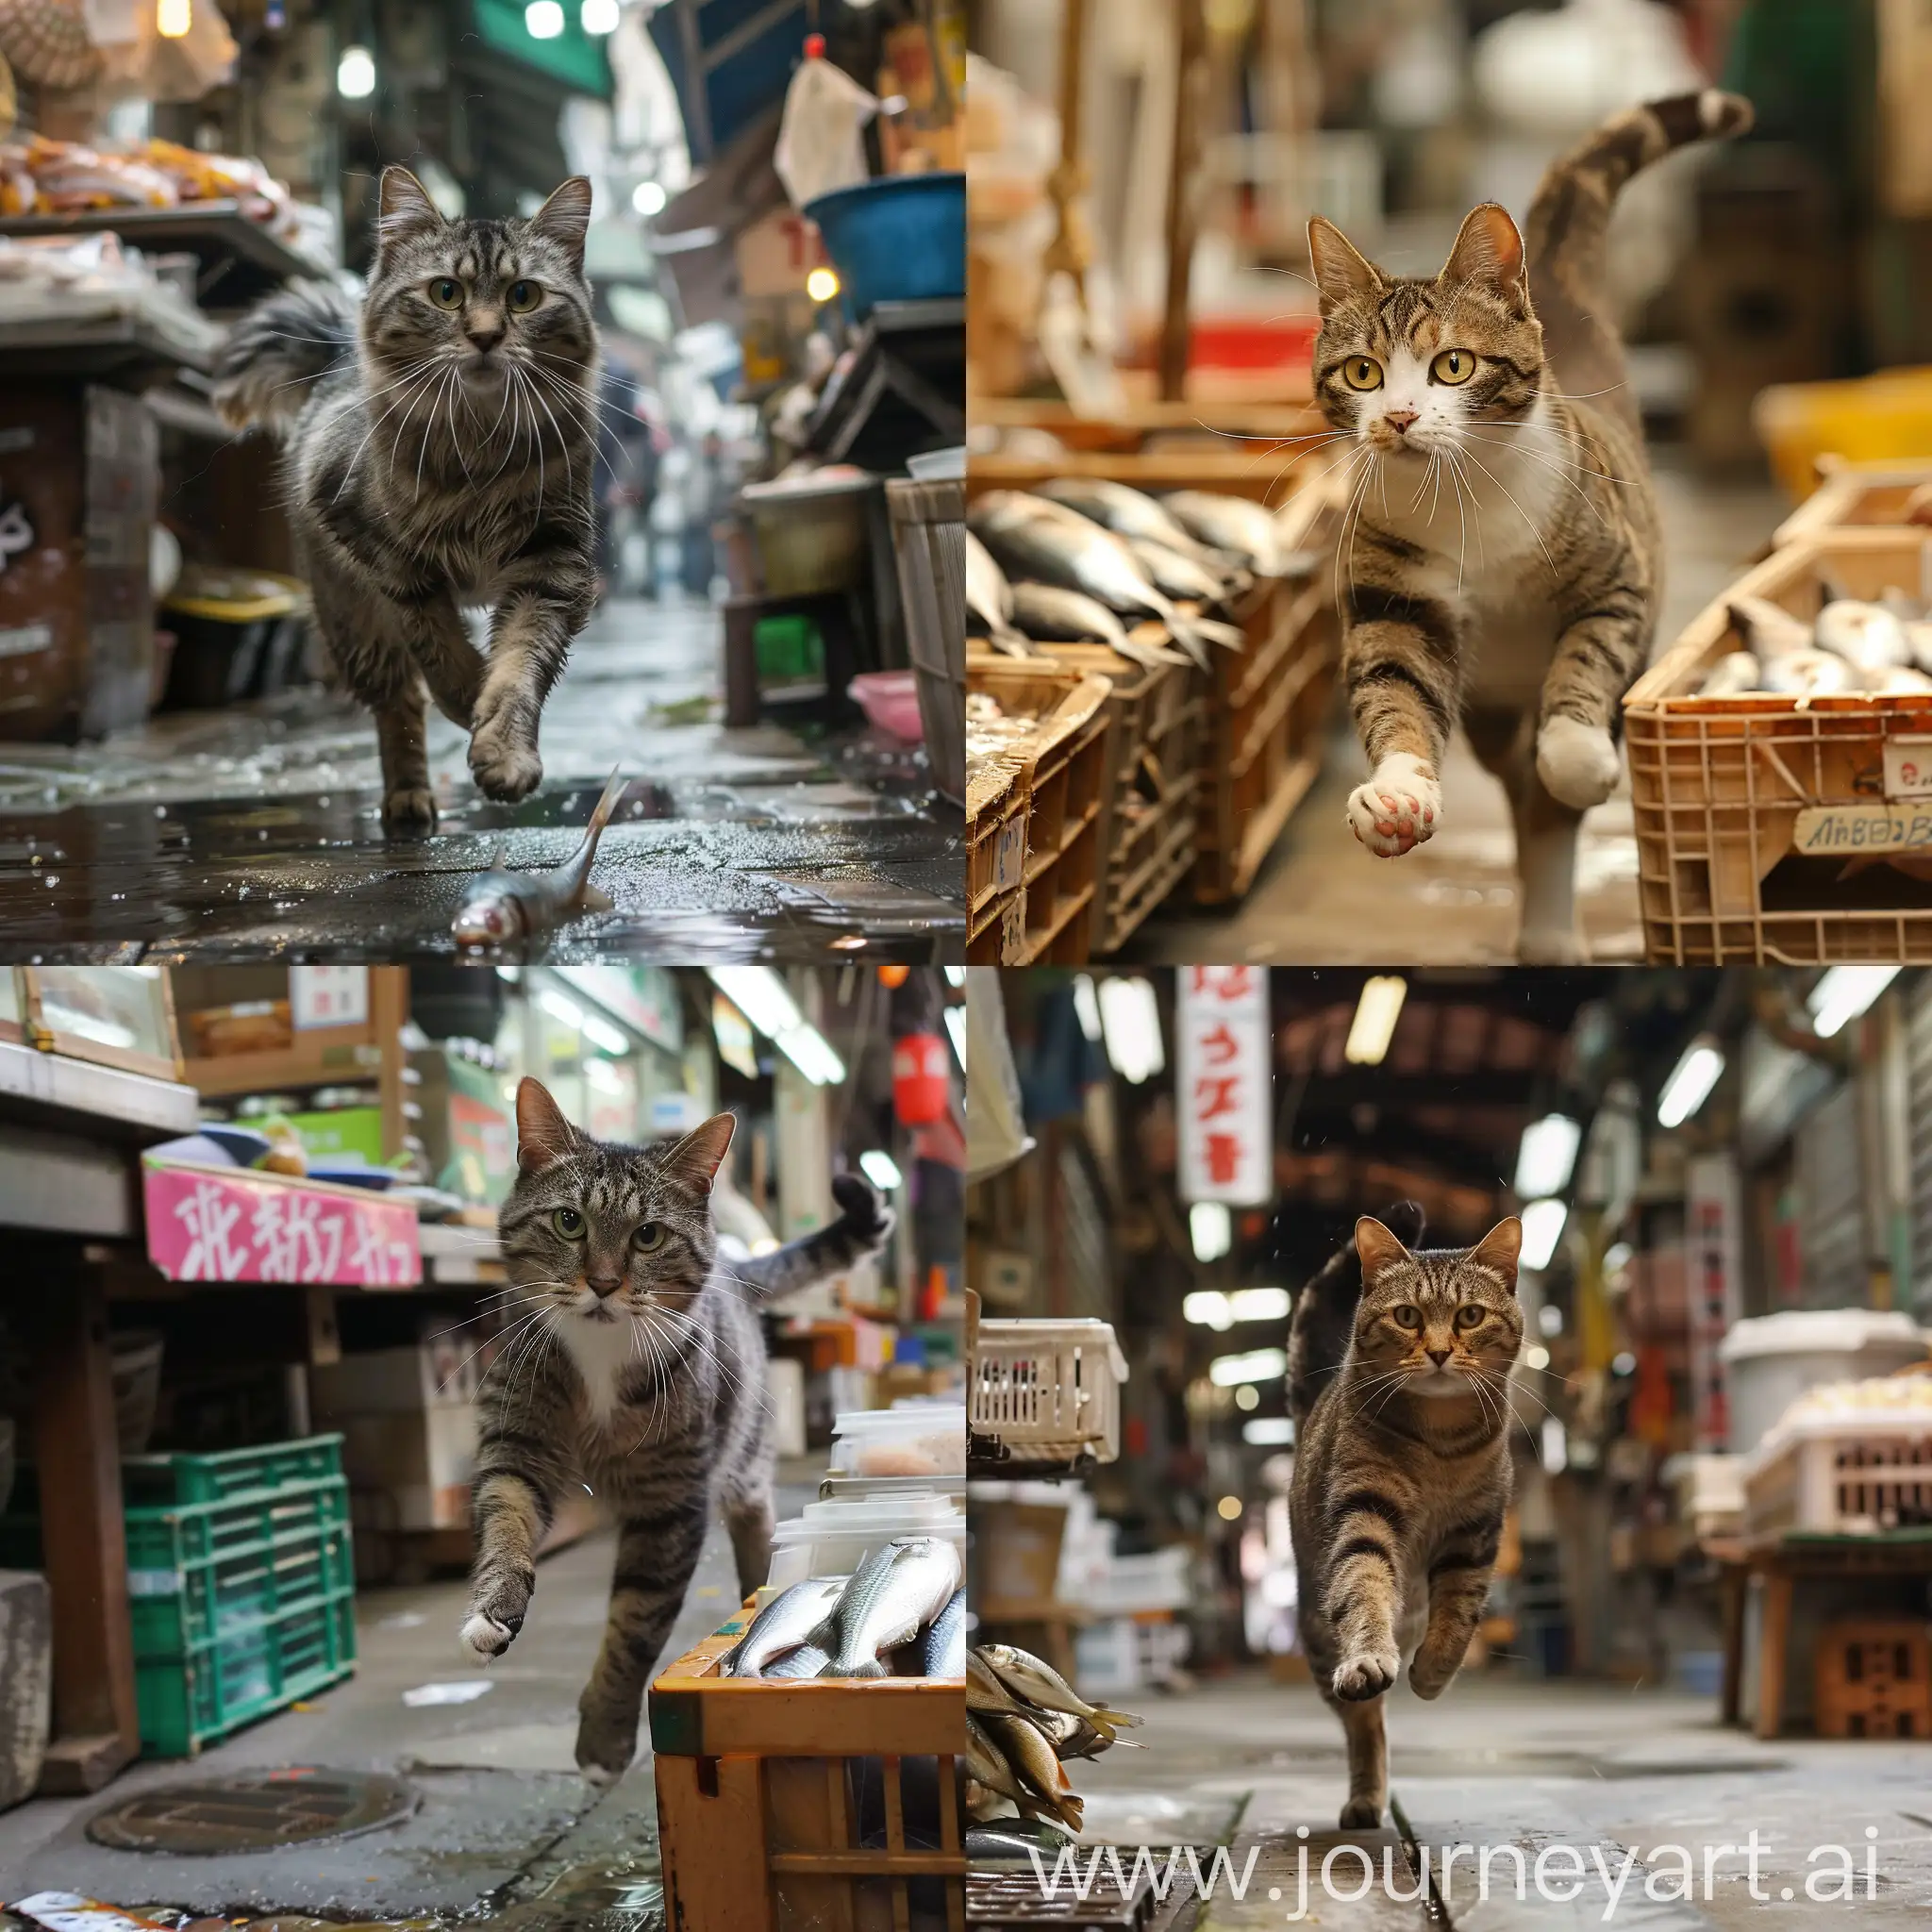 Feline-Frenzy-Cat-Dashing-Through-the-Market-with-a-Catch